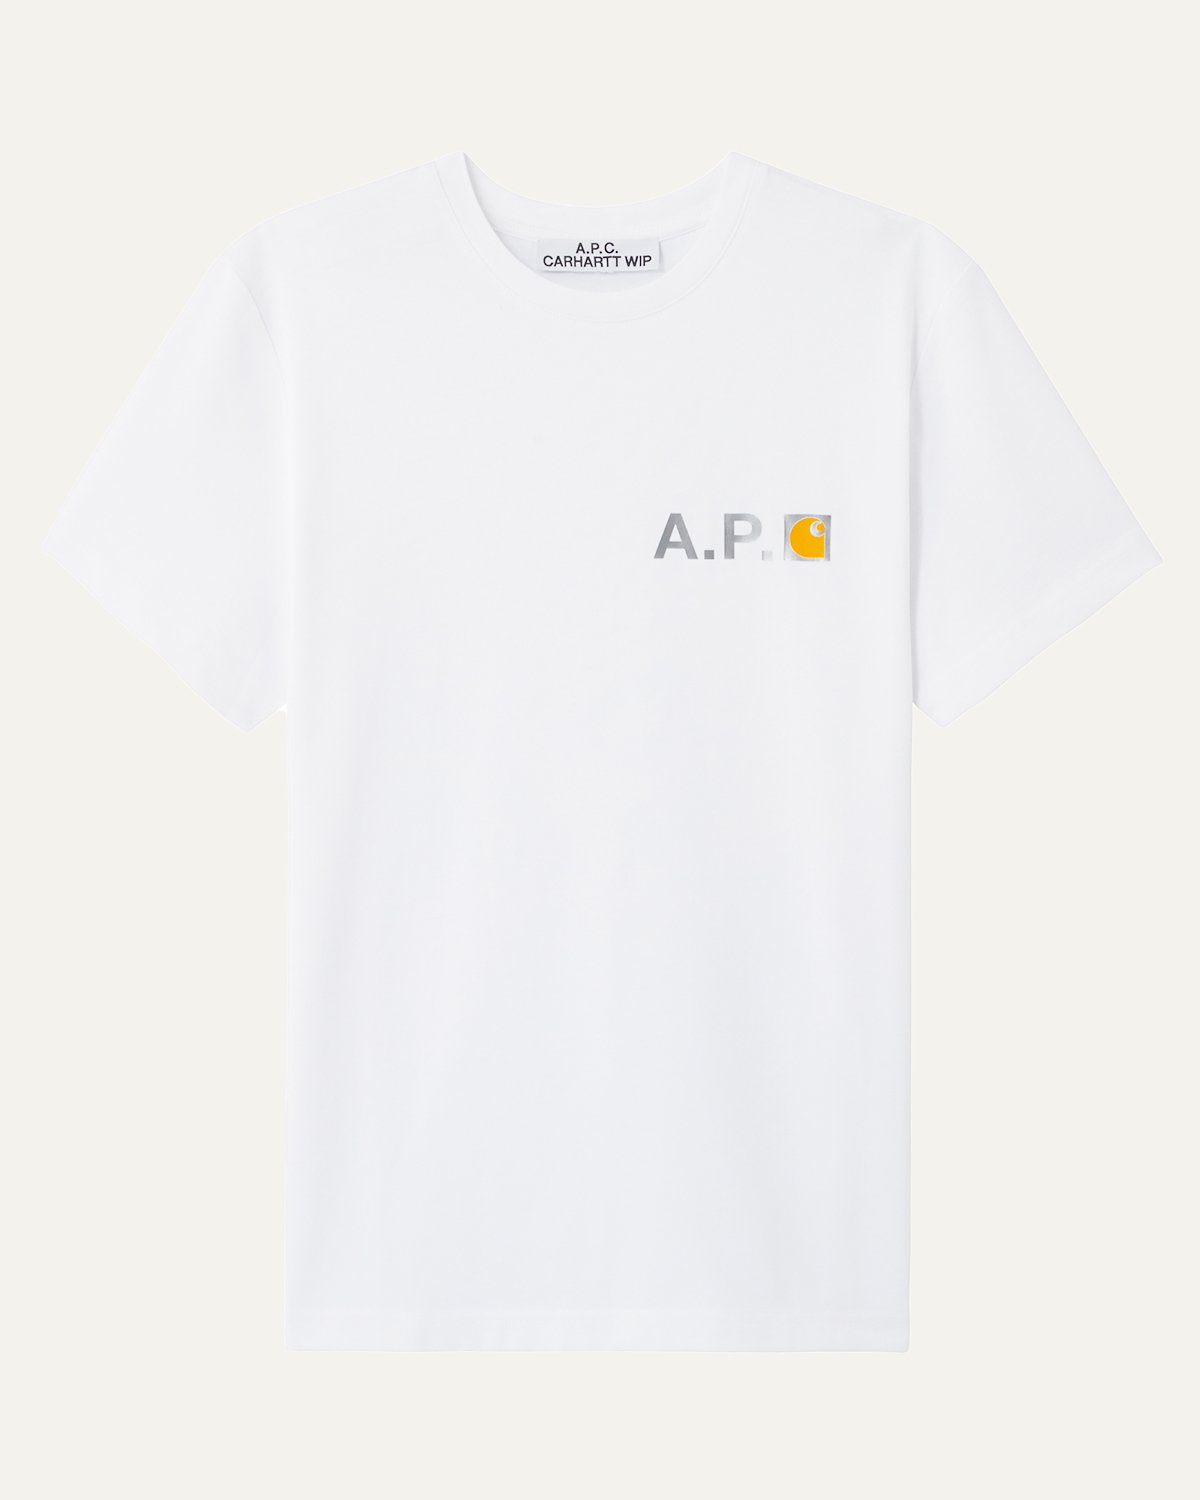 A.P.C. x Carhartt WIP - Fire T-Shirt White - Tops - White - Image 1